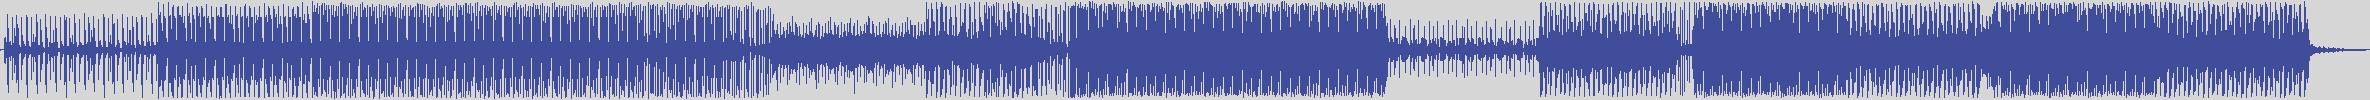 nf_boyz_records [NFY050] Tech Phantom - So Special [Sensomatic Mix] audio wave form